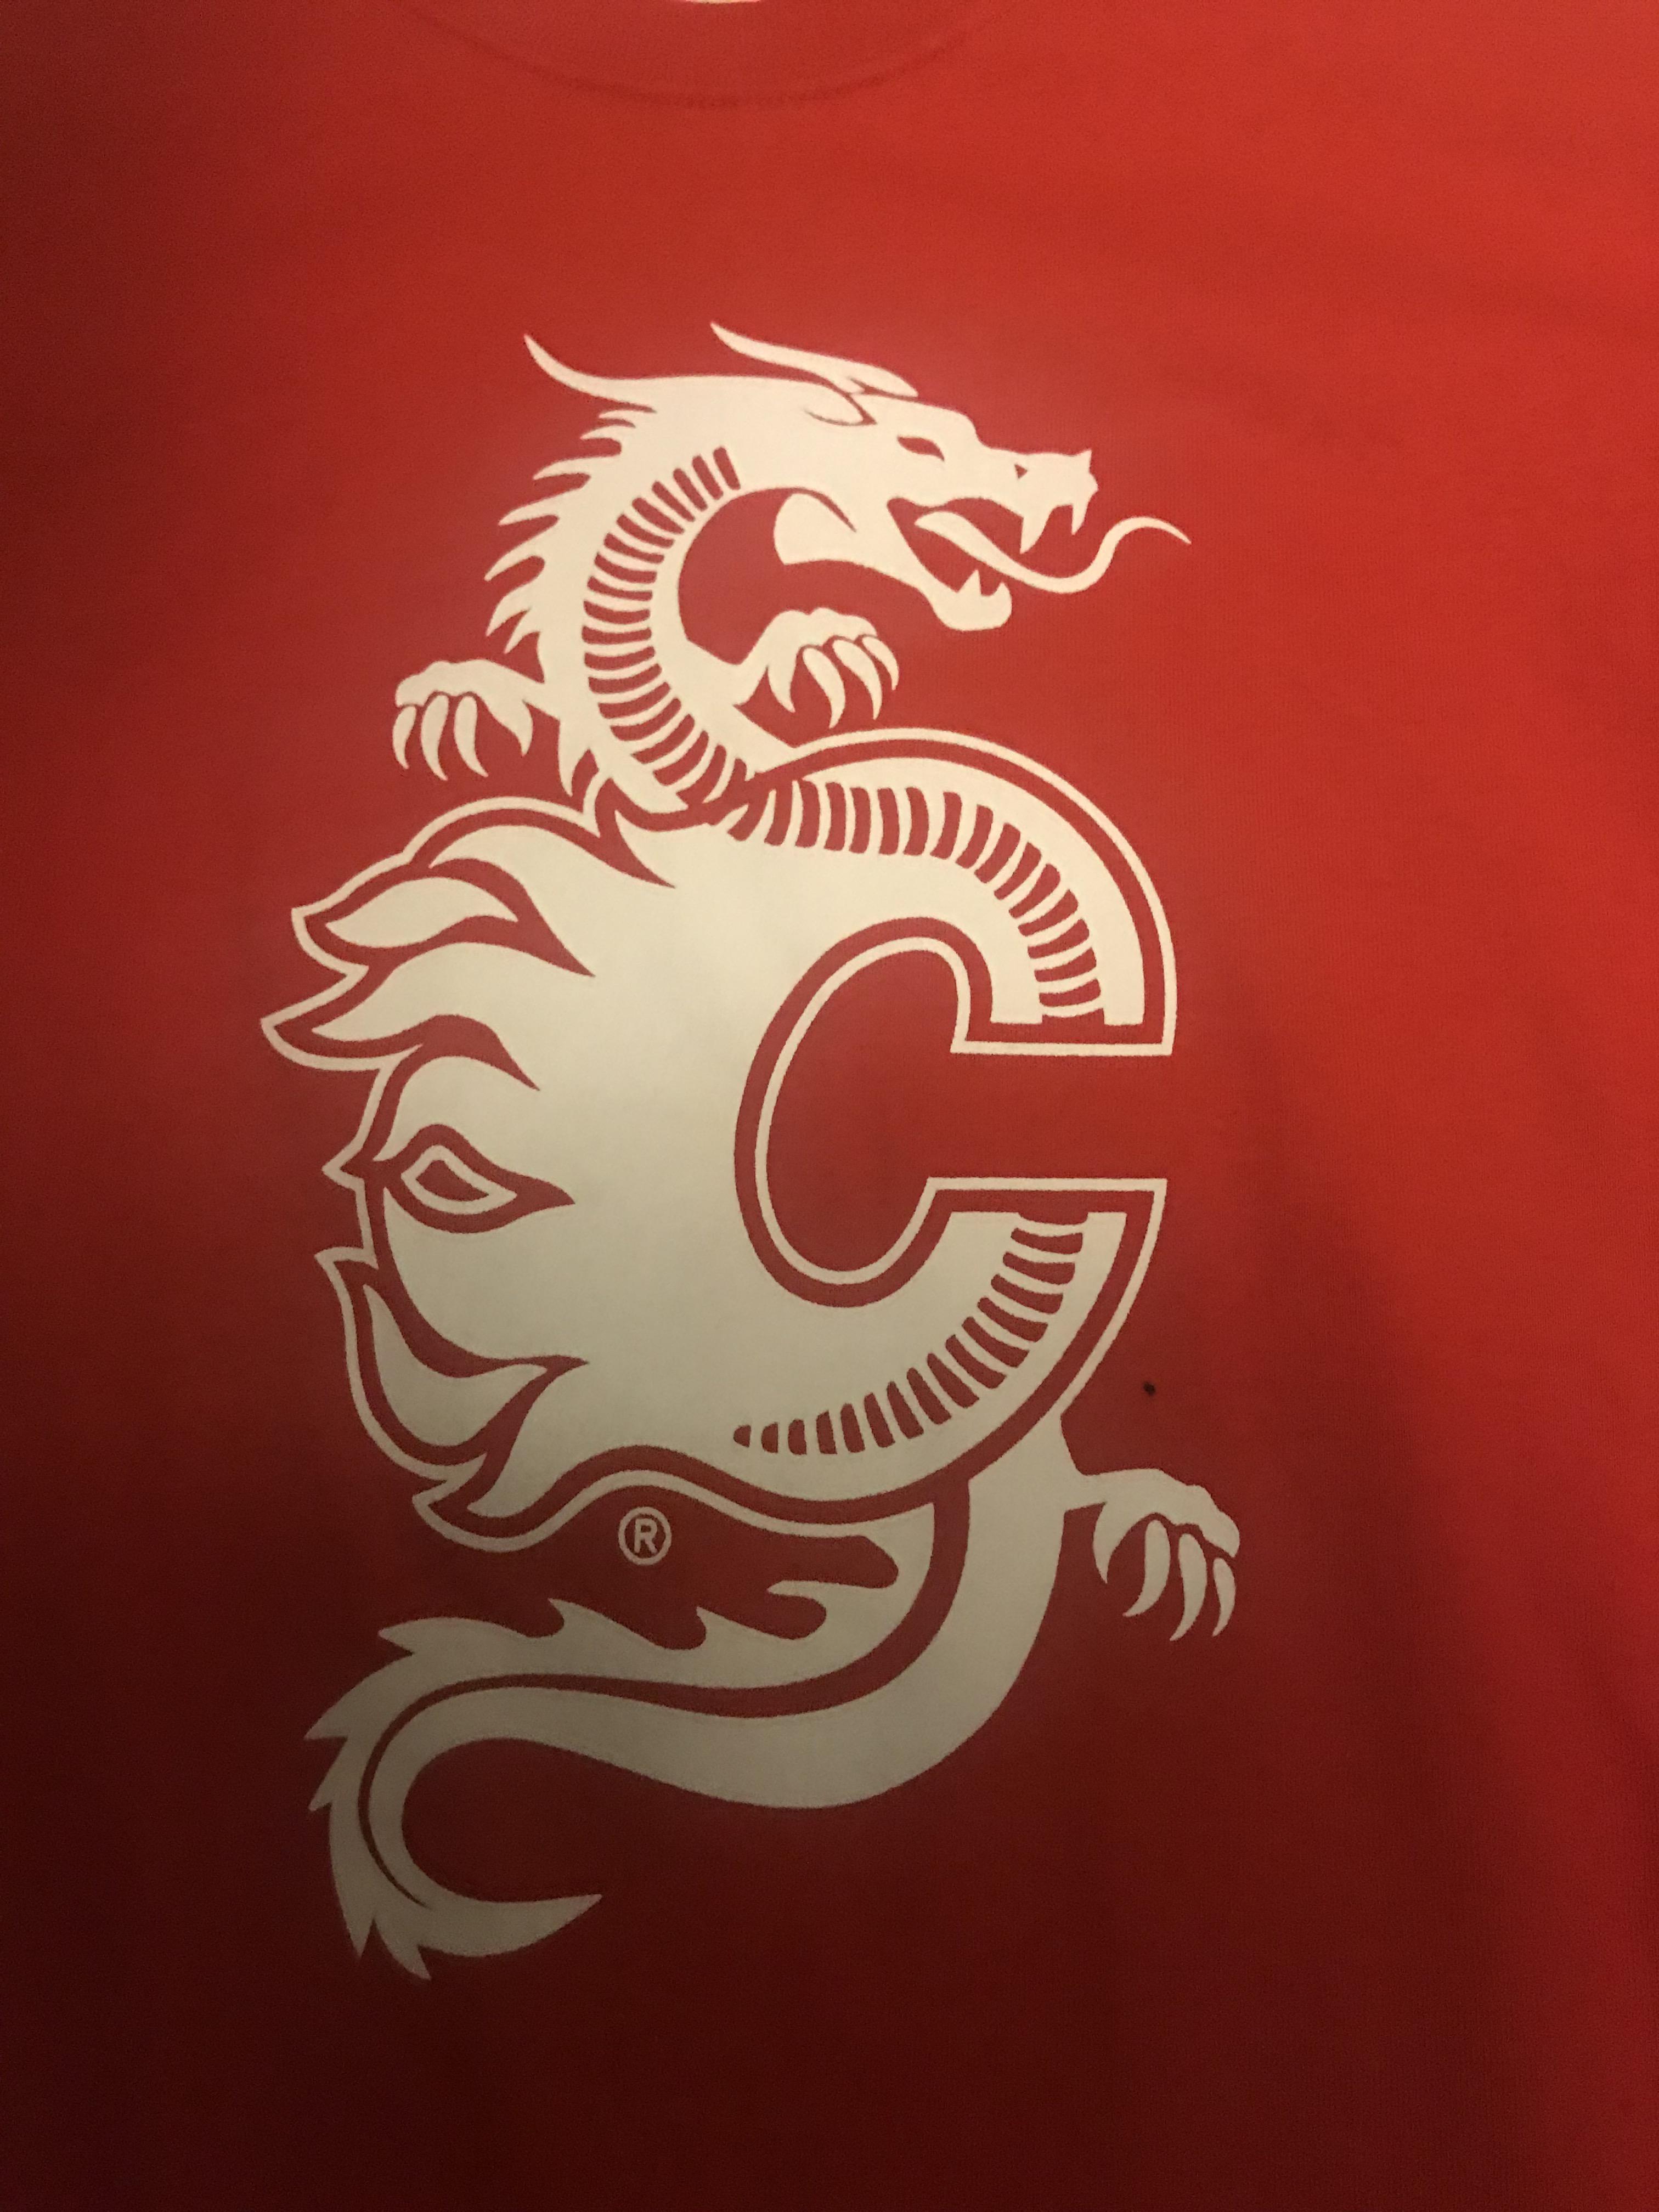 Calgary Flames Logo - Calgary Flames China Shirt/Logo : hockey